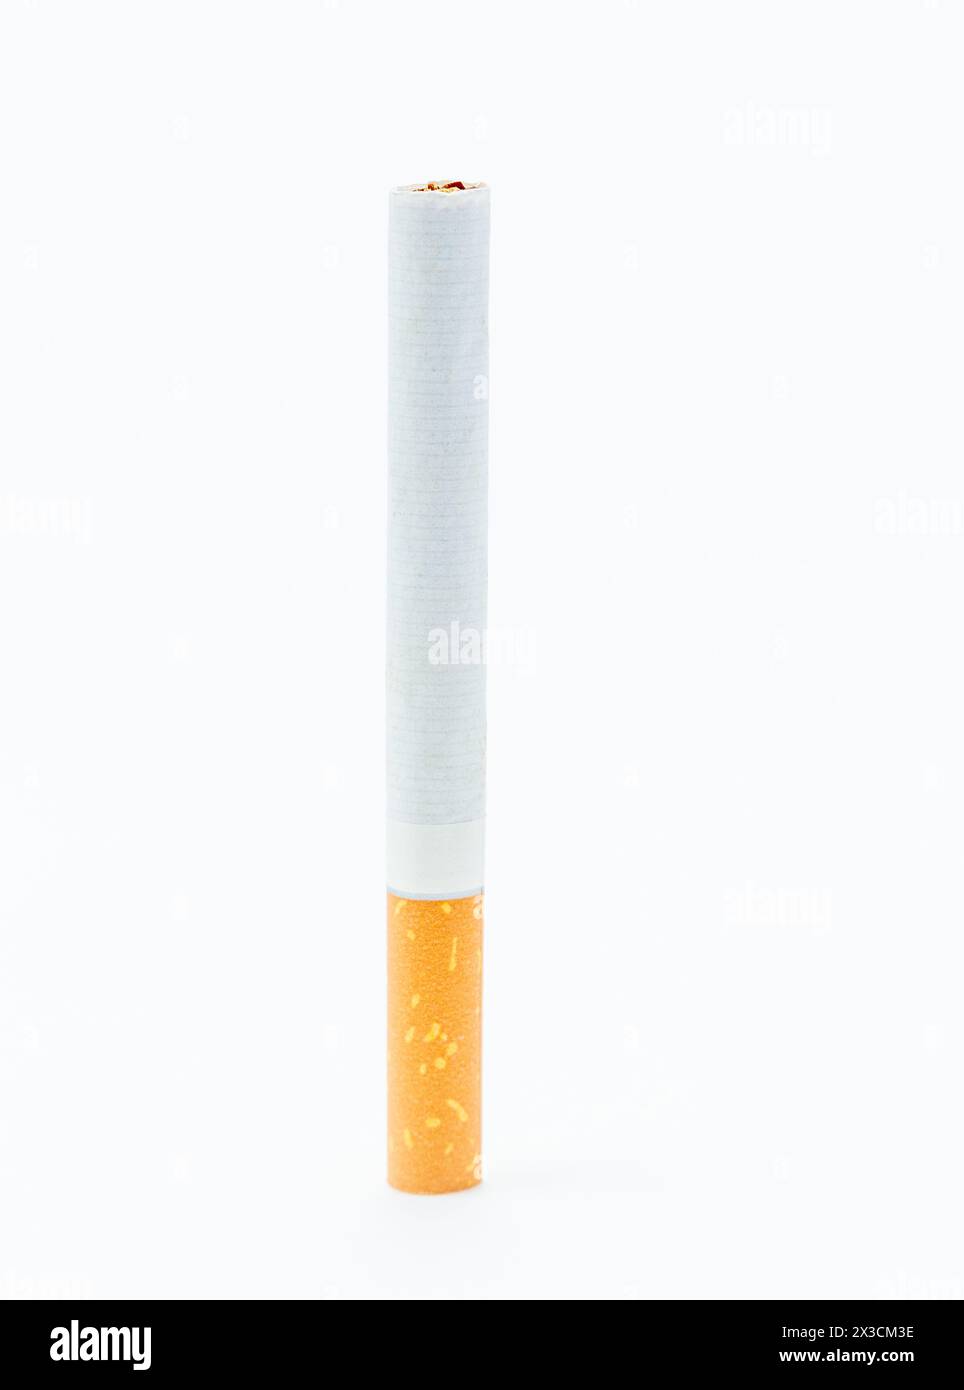 A single cigarette on a white background Stock Photo